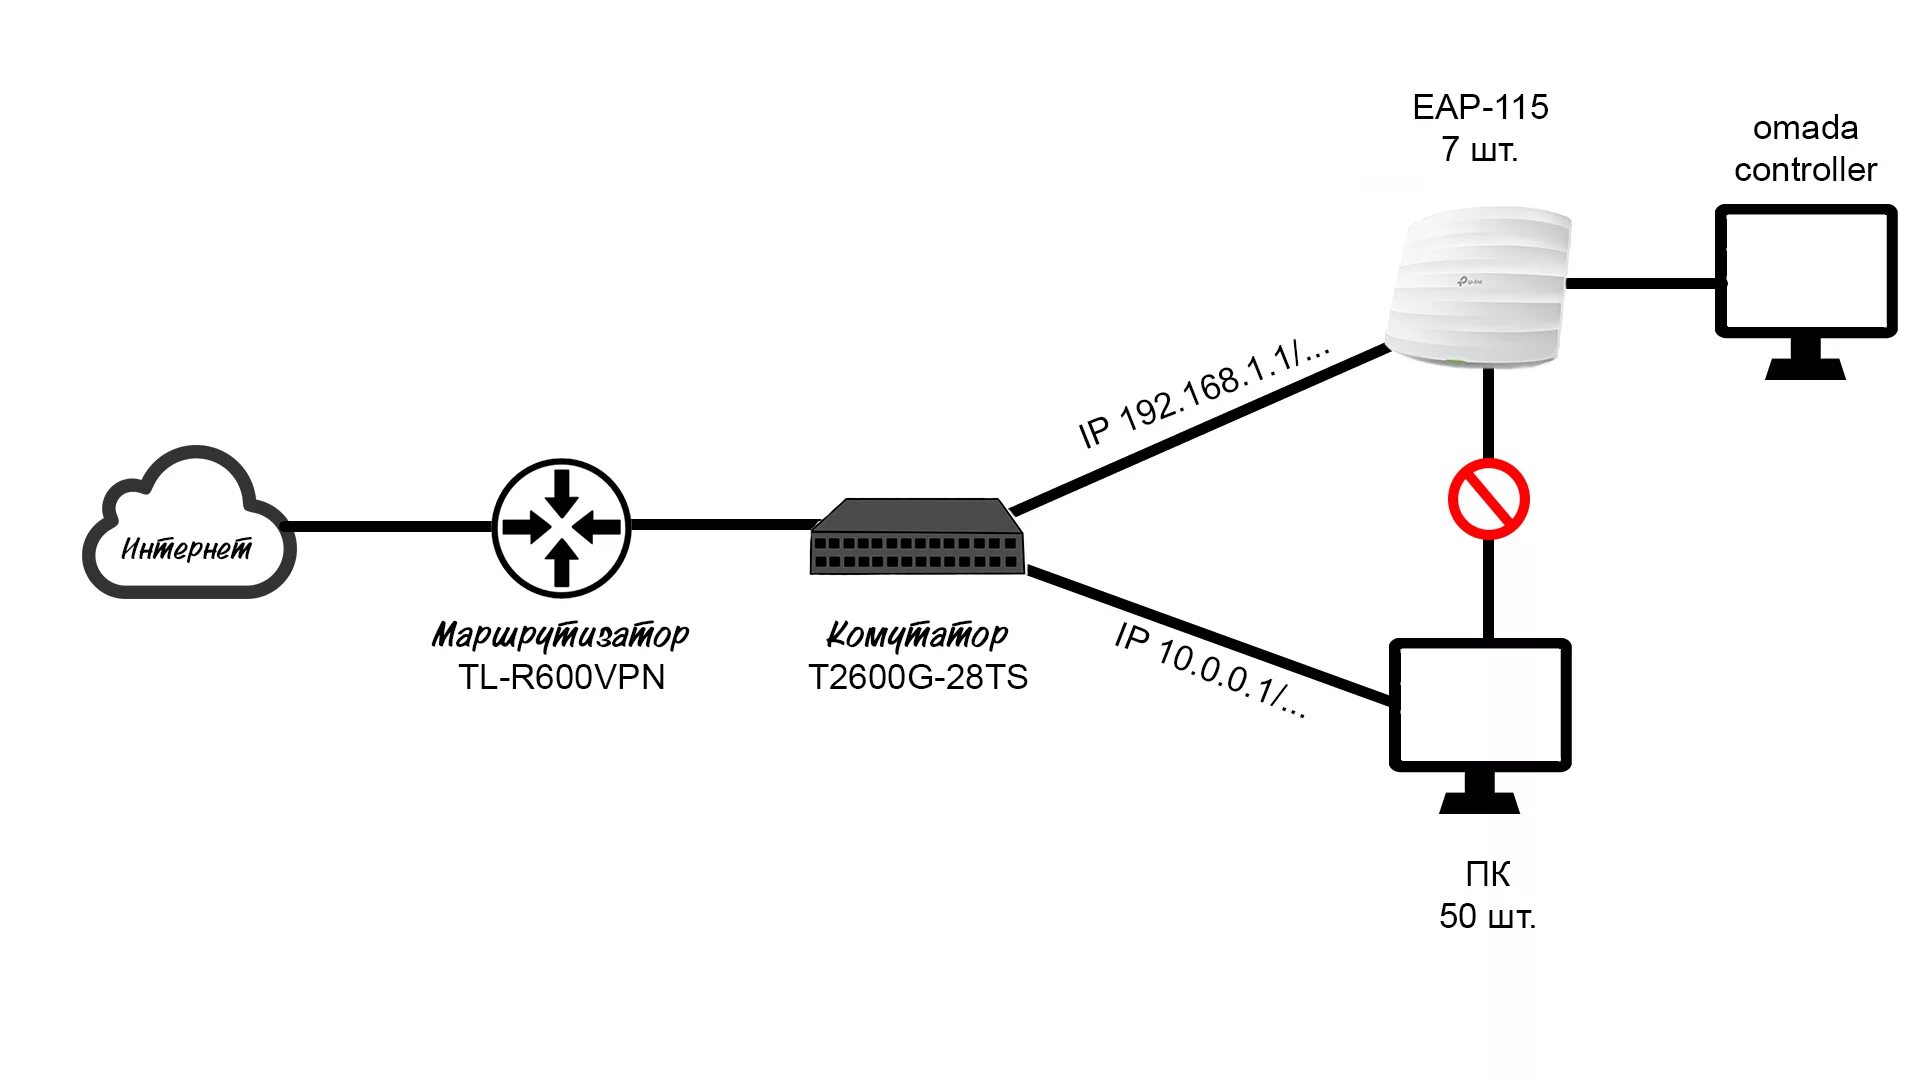 TP-link t2600g-28ts. Виртуальная частная сеть (VPN). R600vpn VLAN VPN. VPN маршрутизатор omada.